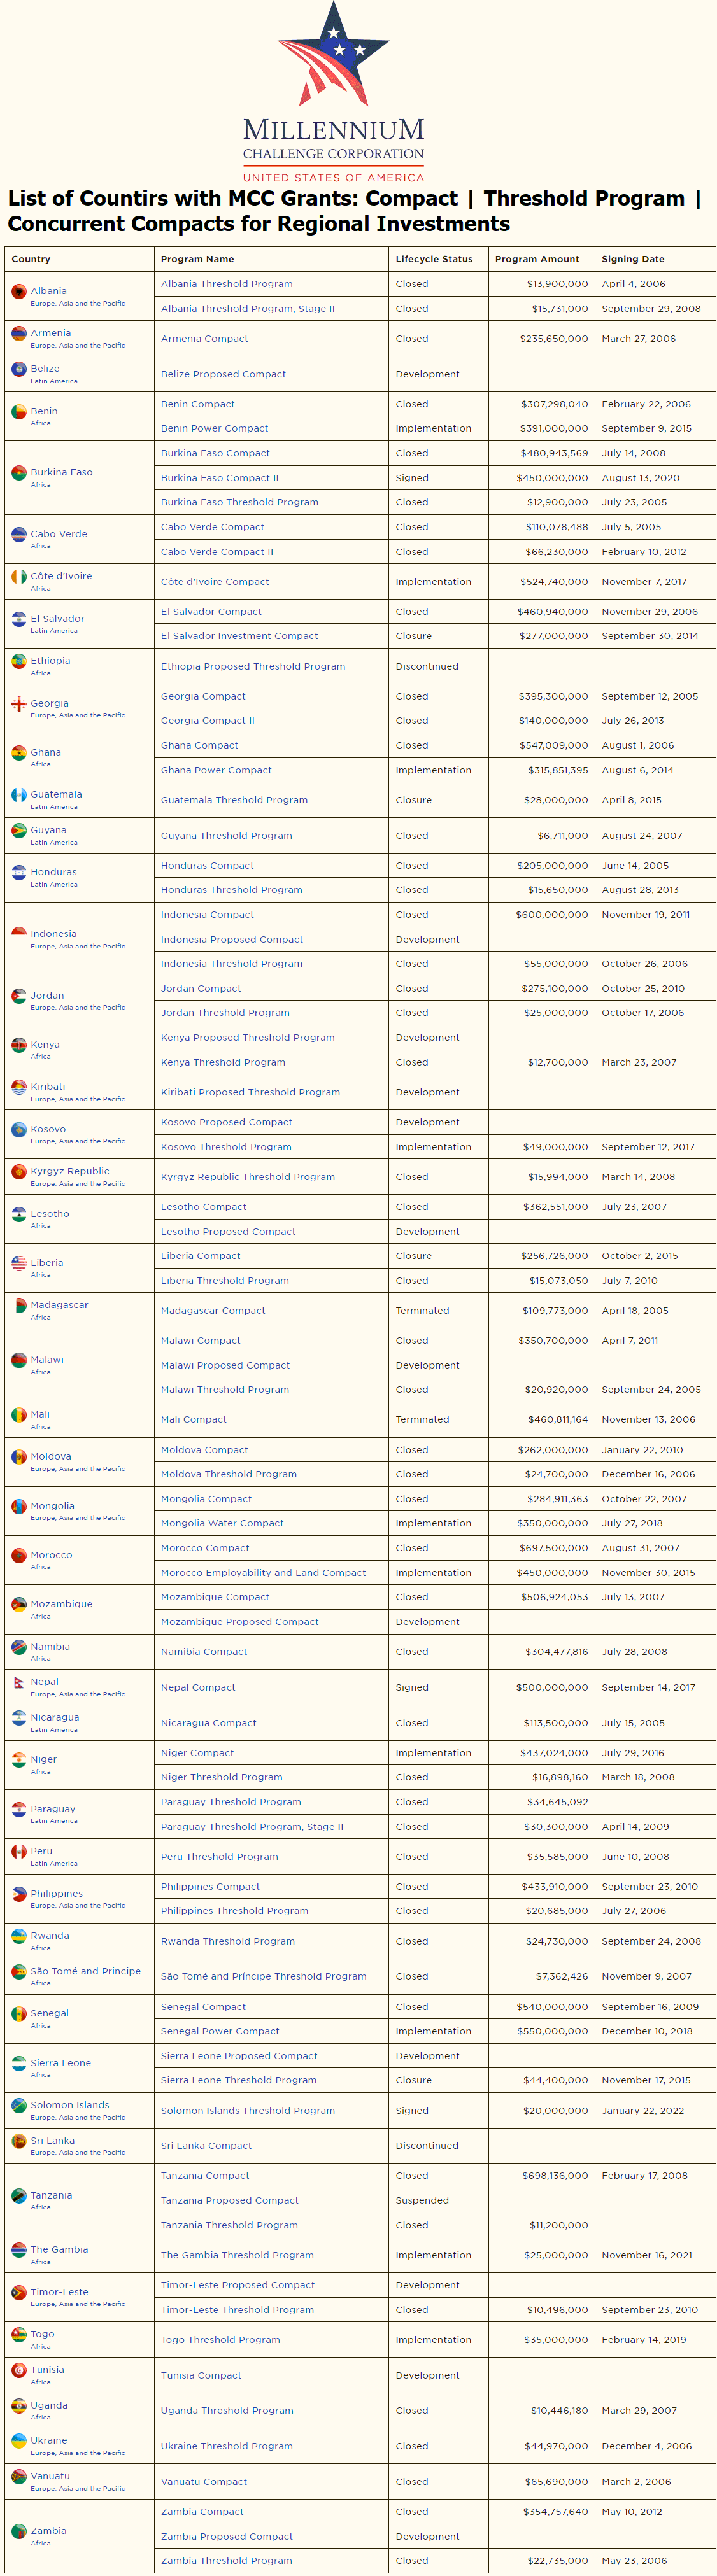 List of Countries Where MCC Grants